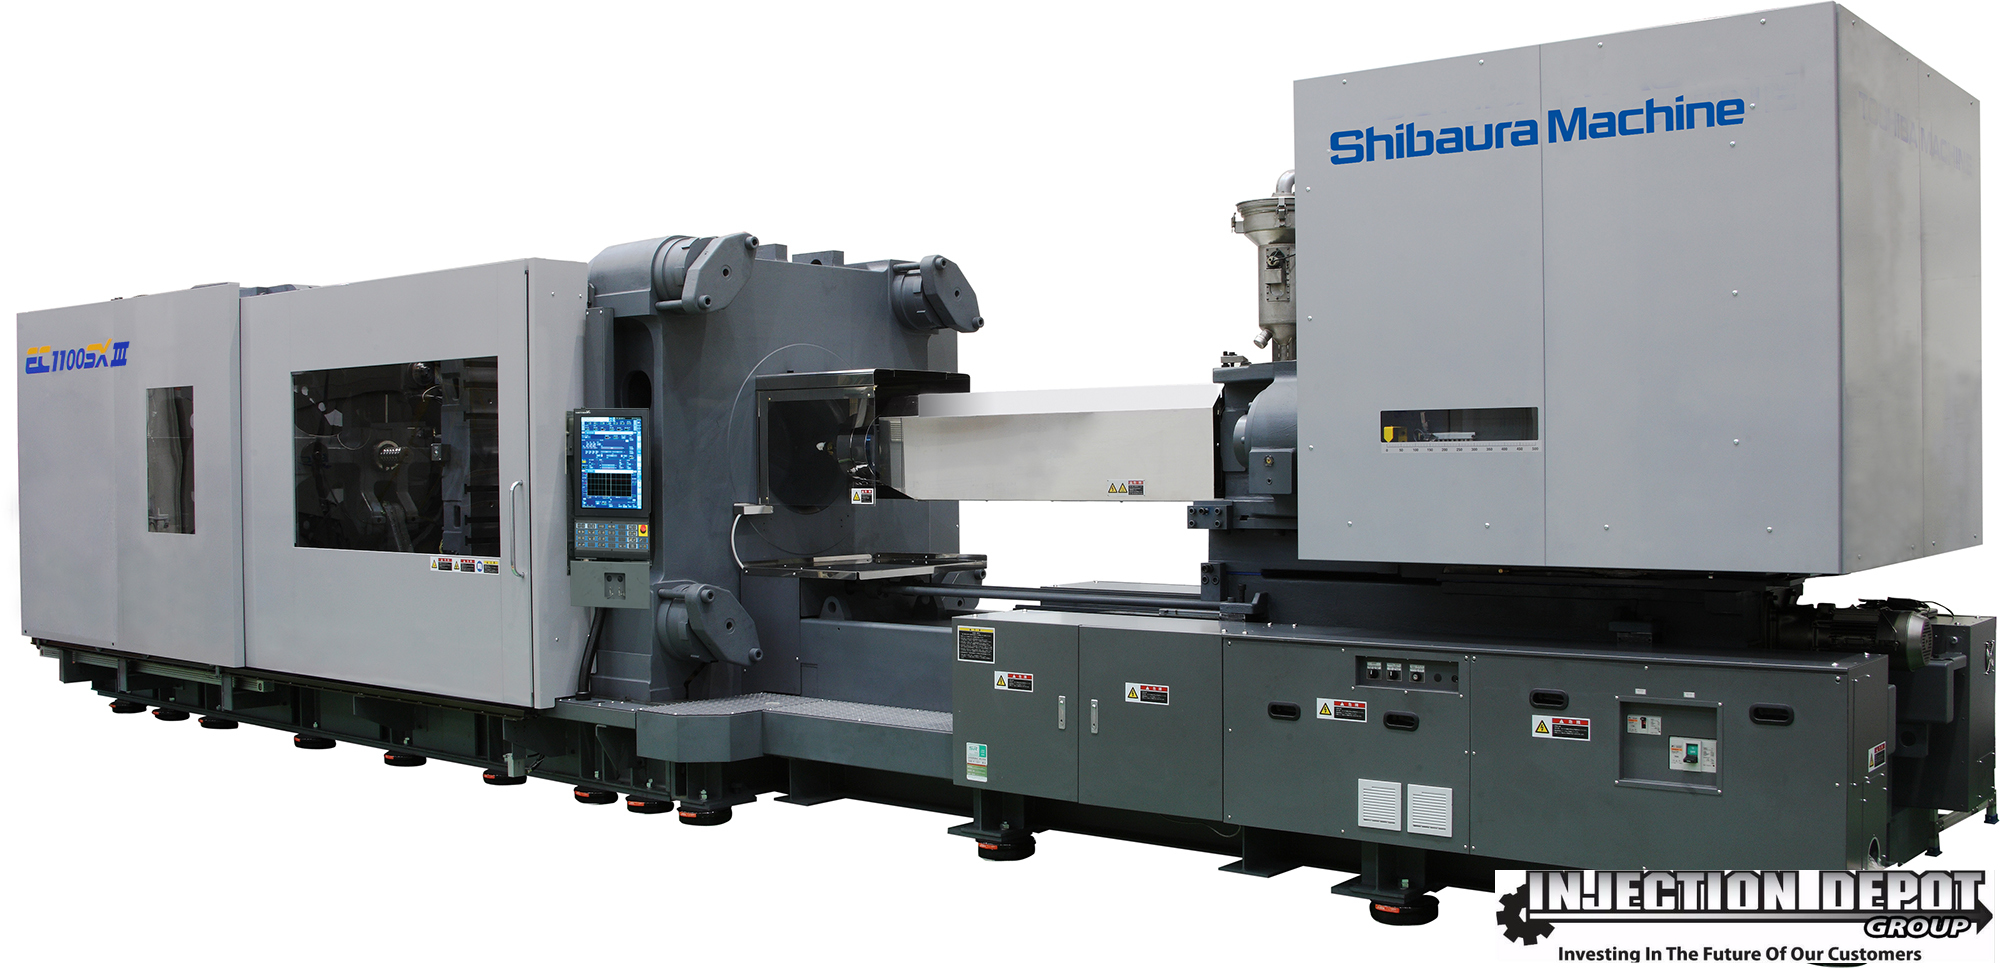 SHIBAURA MACHINE EC1100SXIIIV70-i120 AT Horizontal Injection Moulding Machines | INJECTION DEPOT GROUP